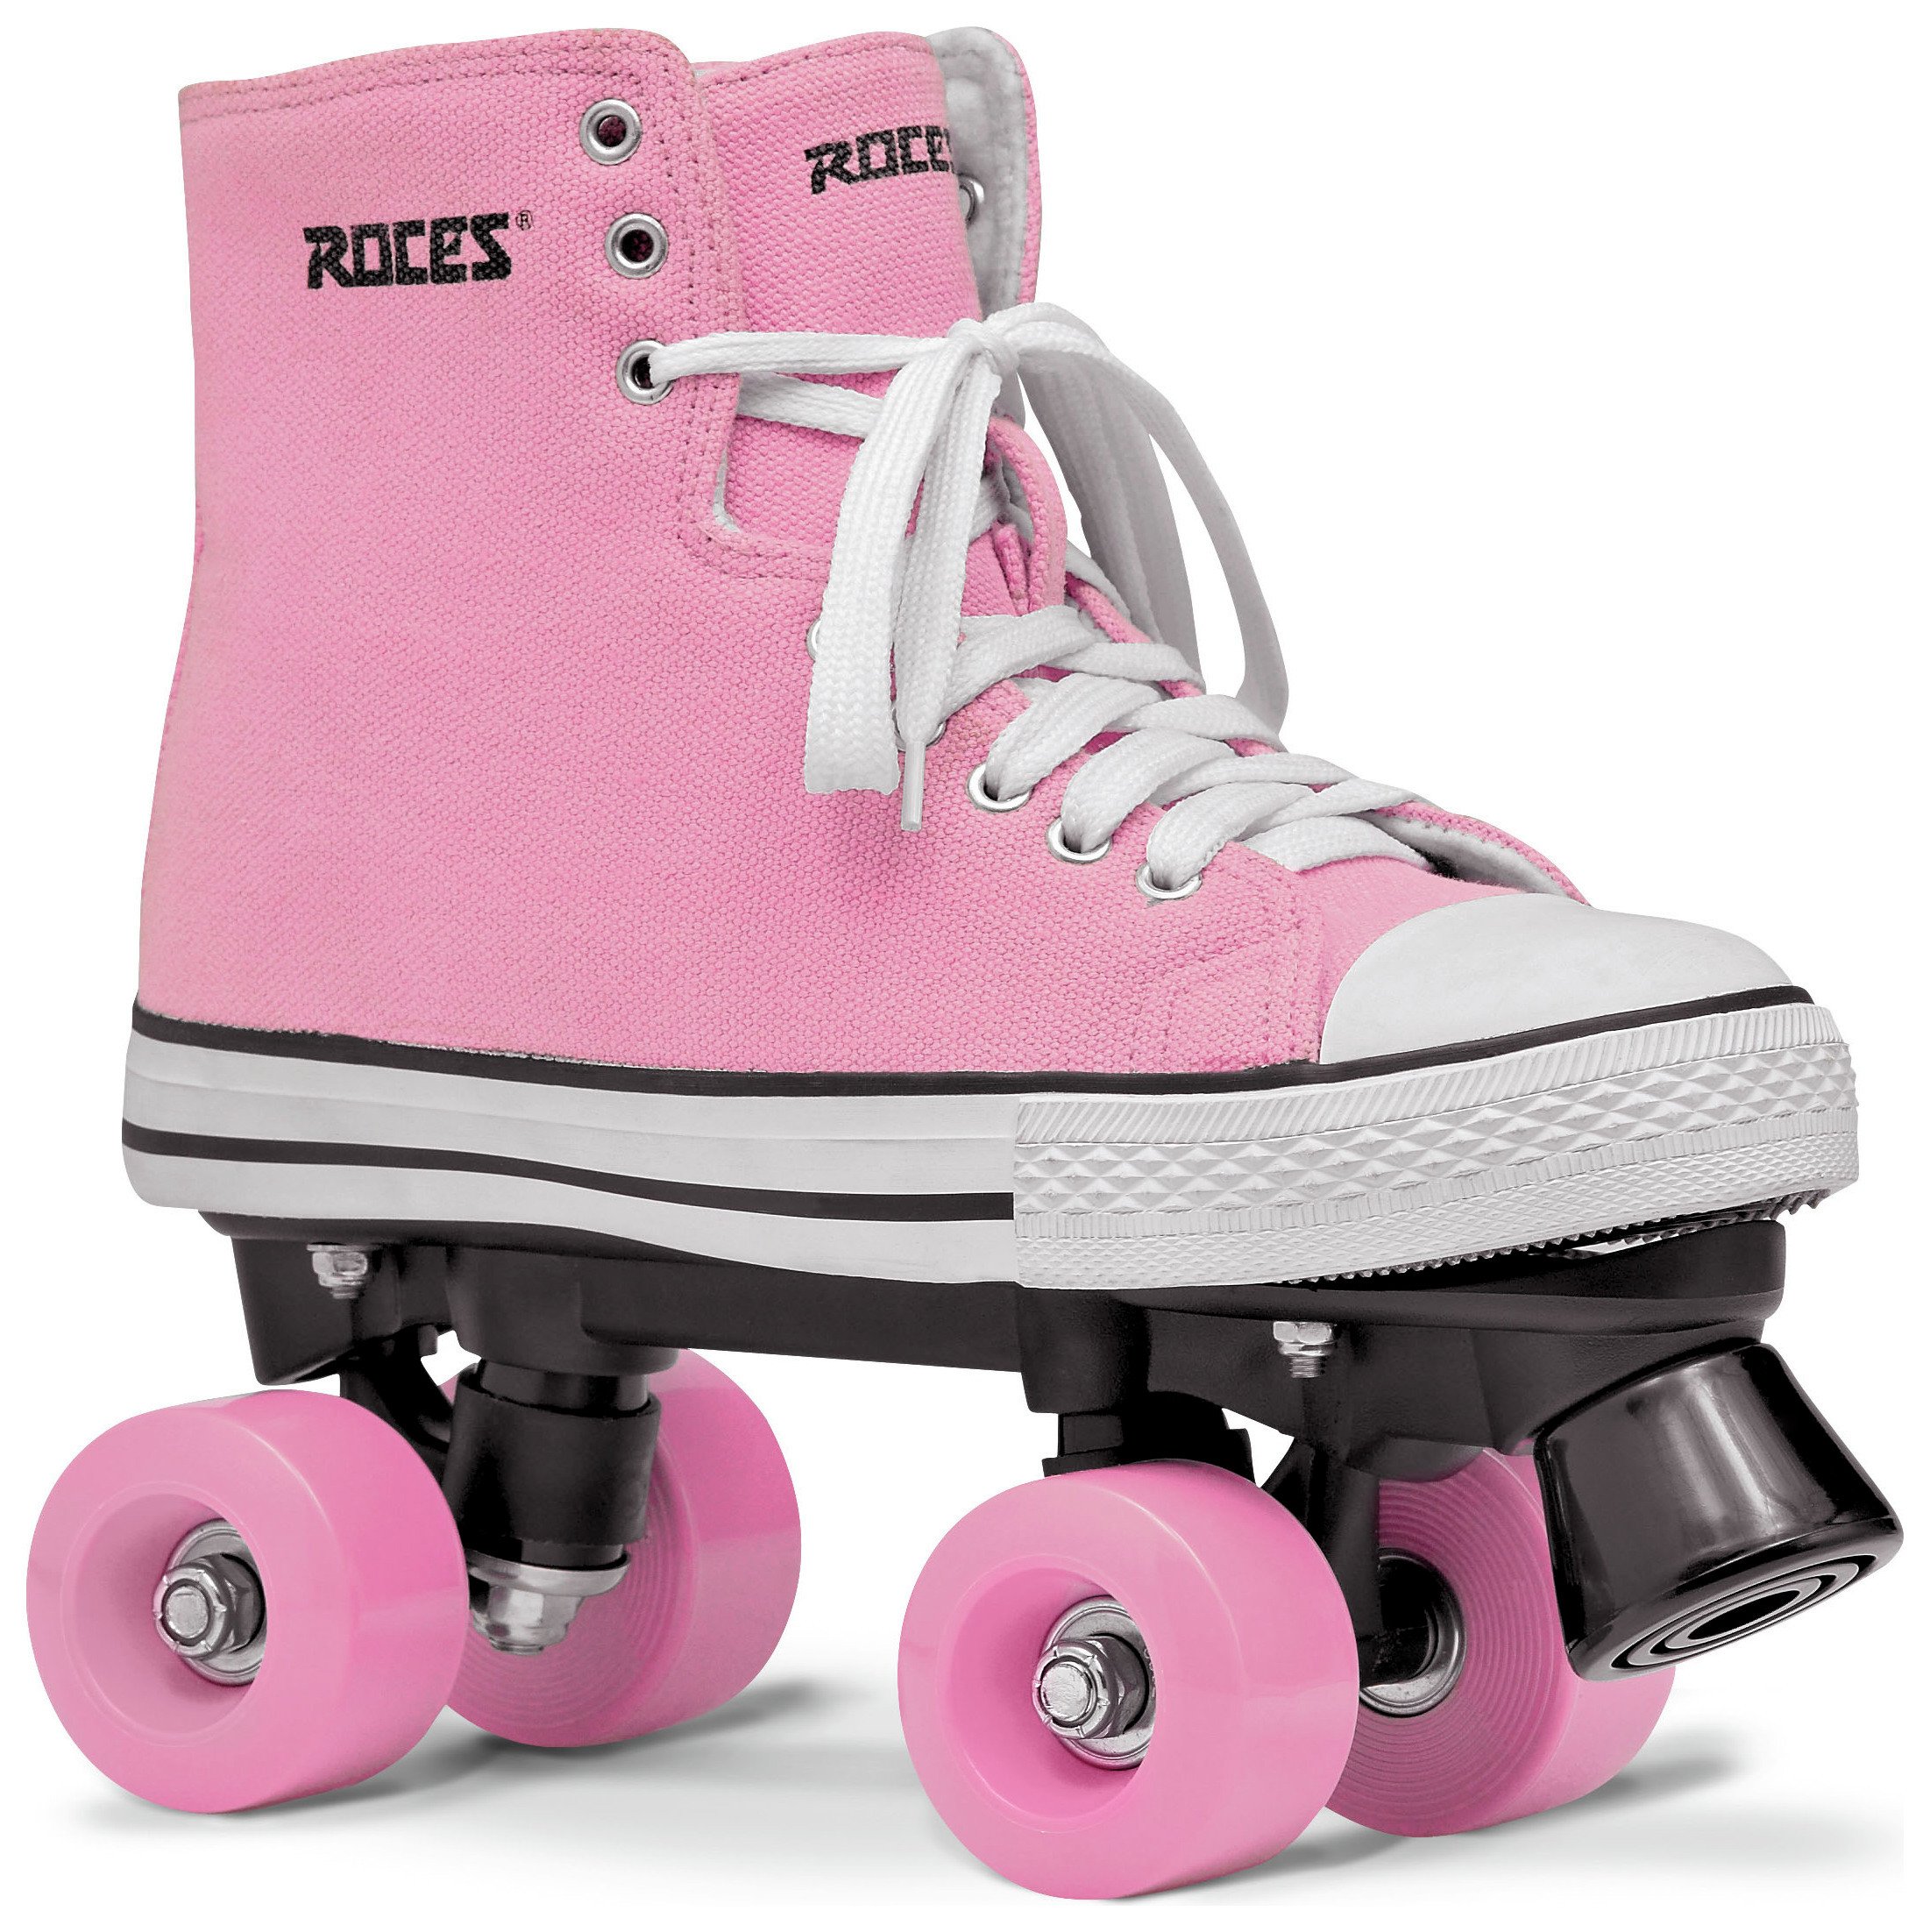 Roces Chuck - Roller Skates 3 Review